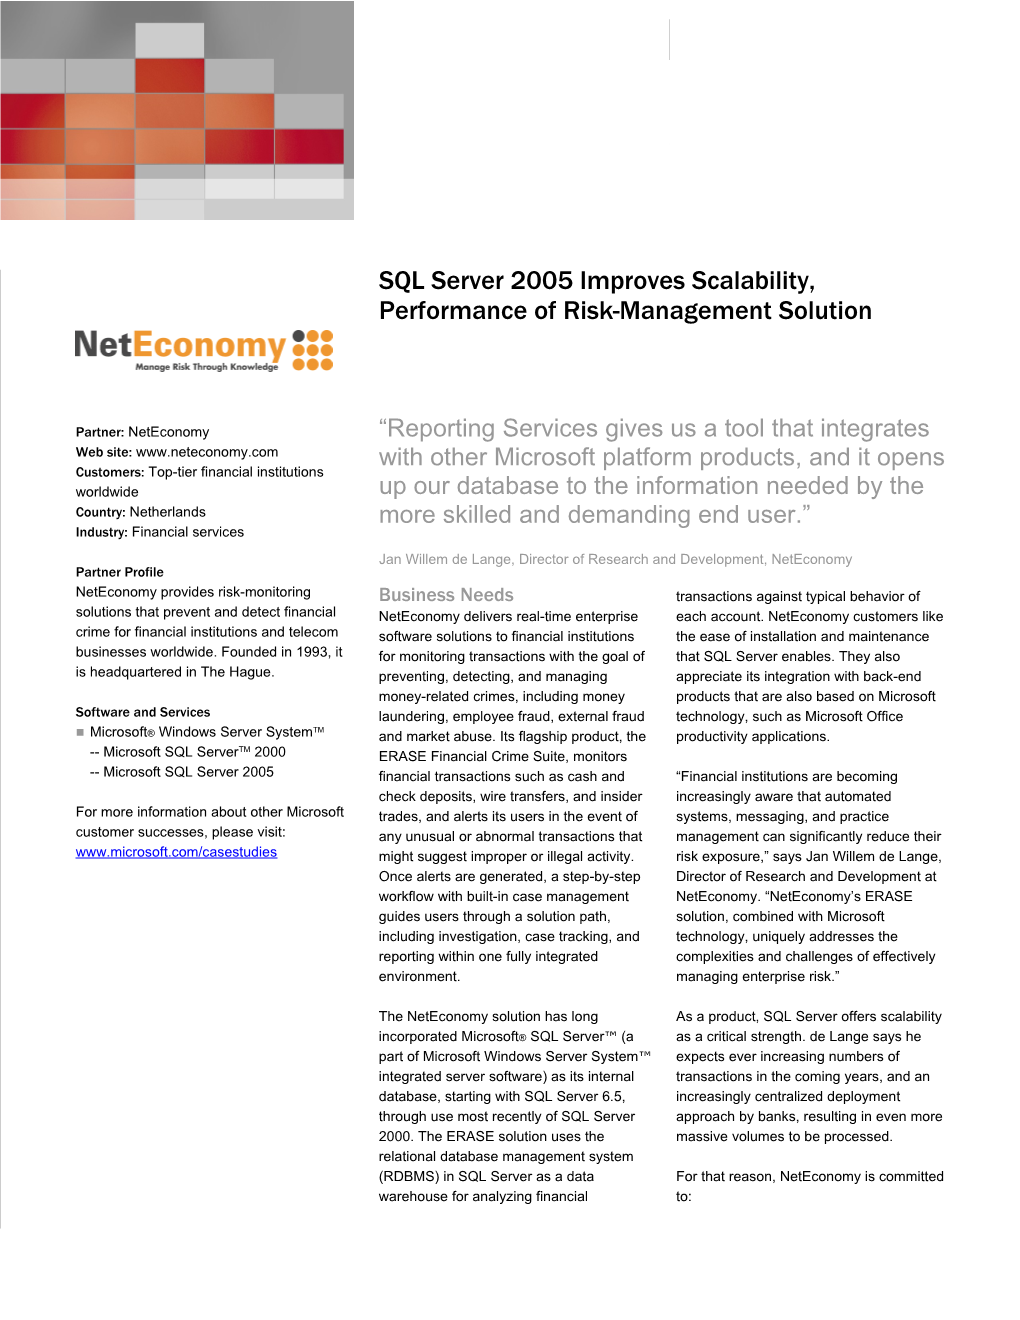 SQL Server 2005 Improves Scalability, Performance of Risk-Management Solution